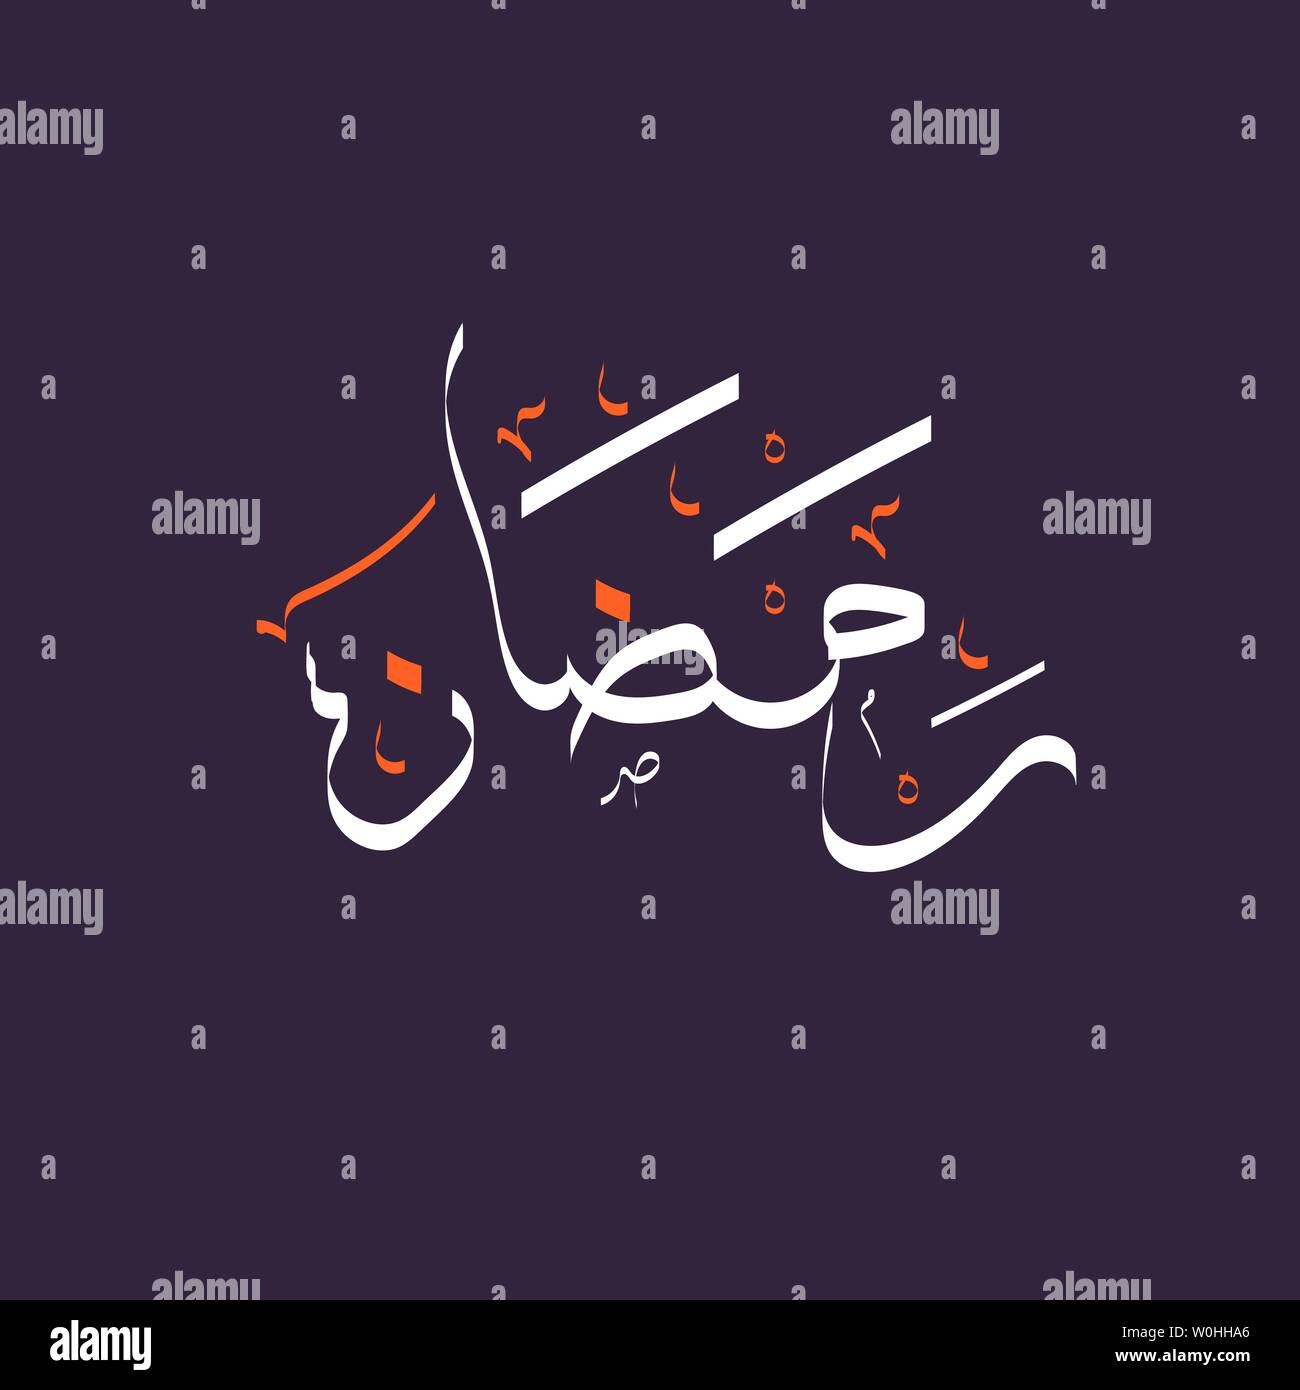 Arabic calligraphy text of Ramadan Ninth month Islamic Hijri Calendar